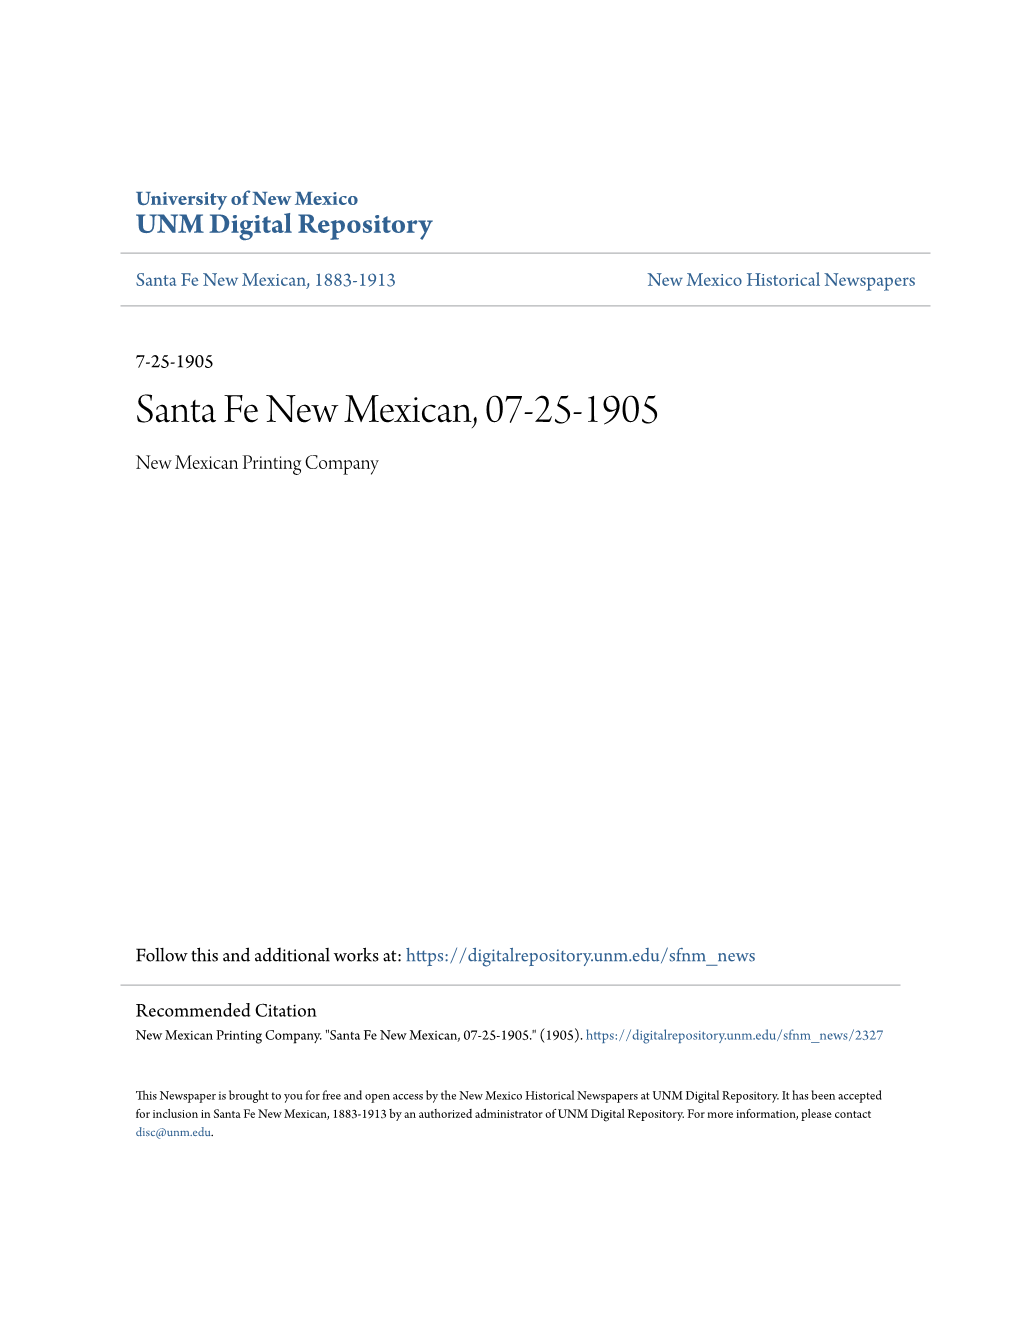 Santa Fe New Mexican, 07-25-1905 New Mexican Printing Company